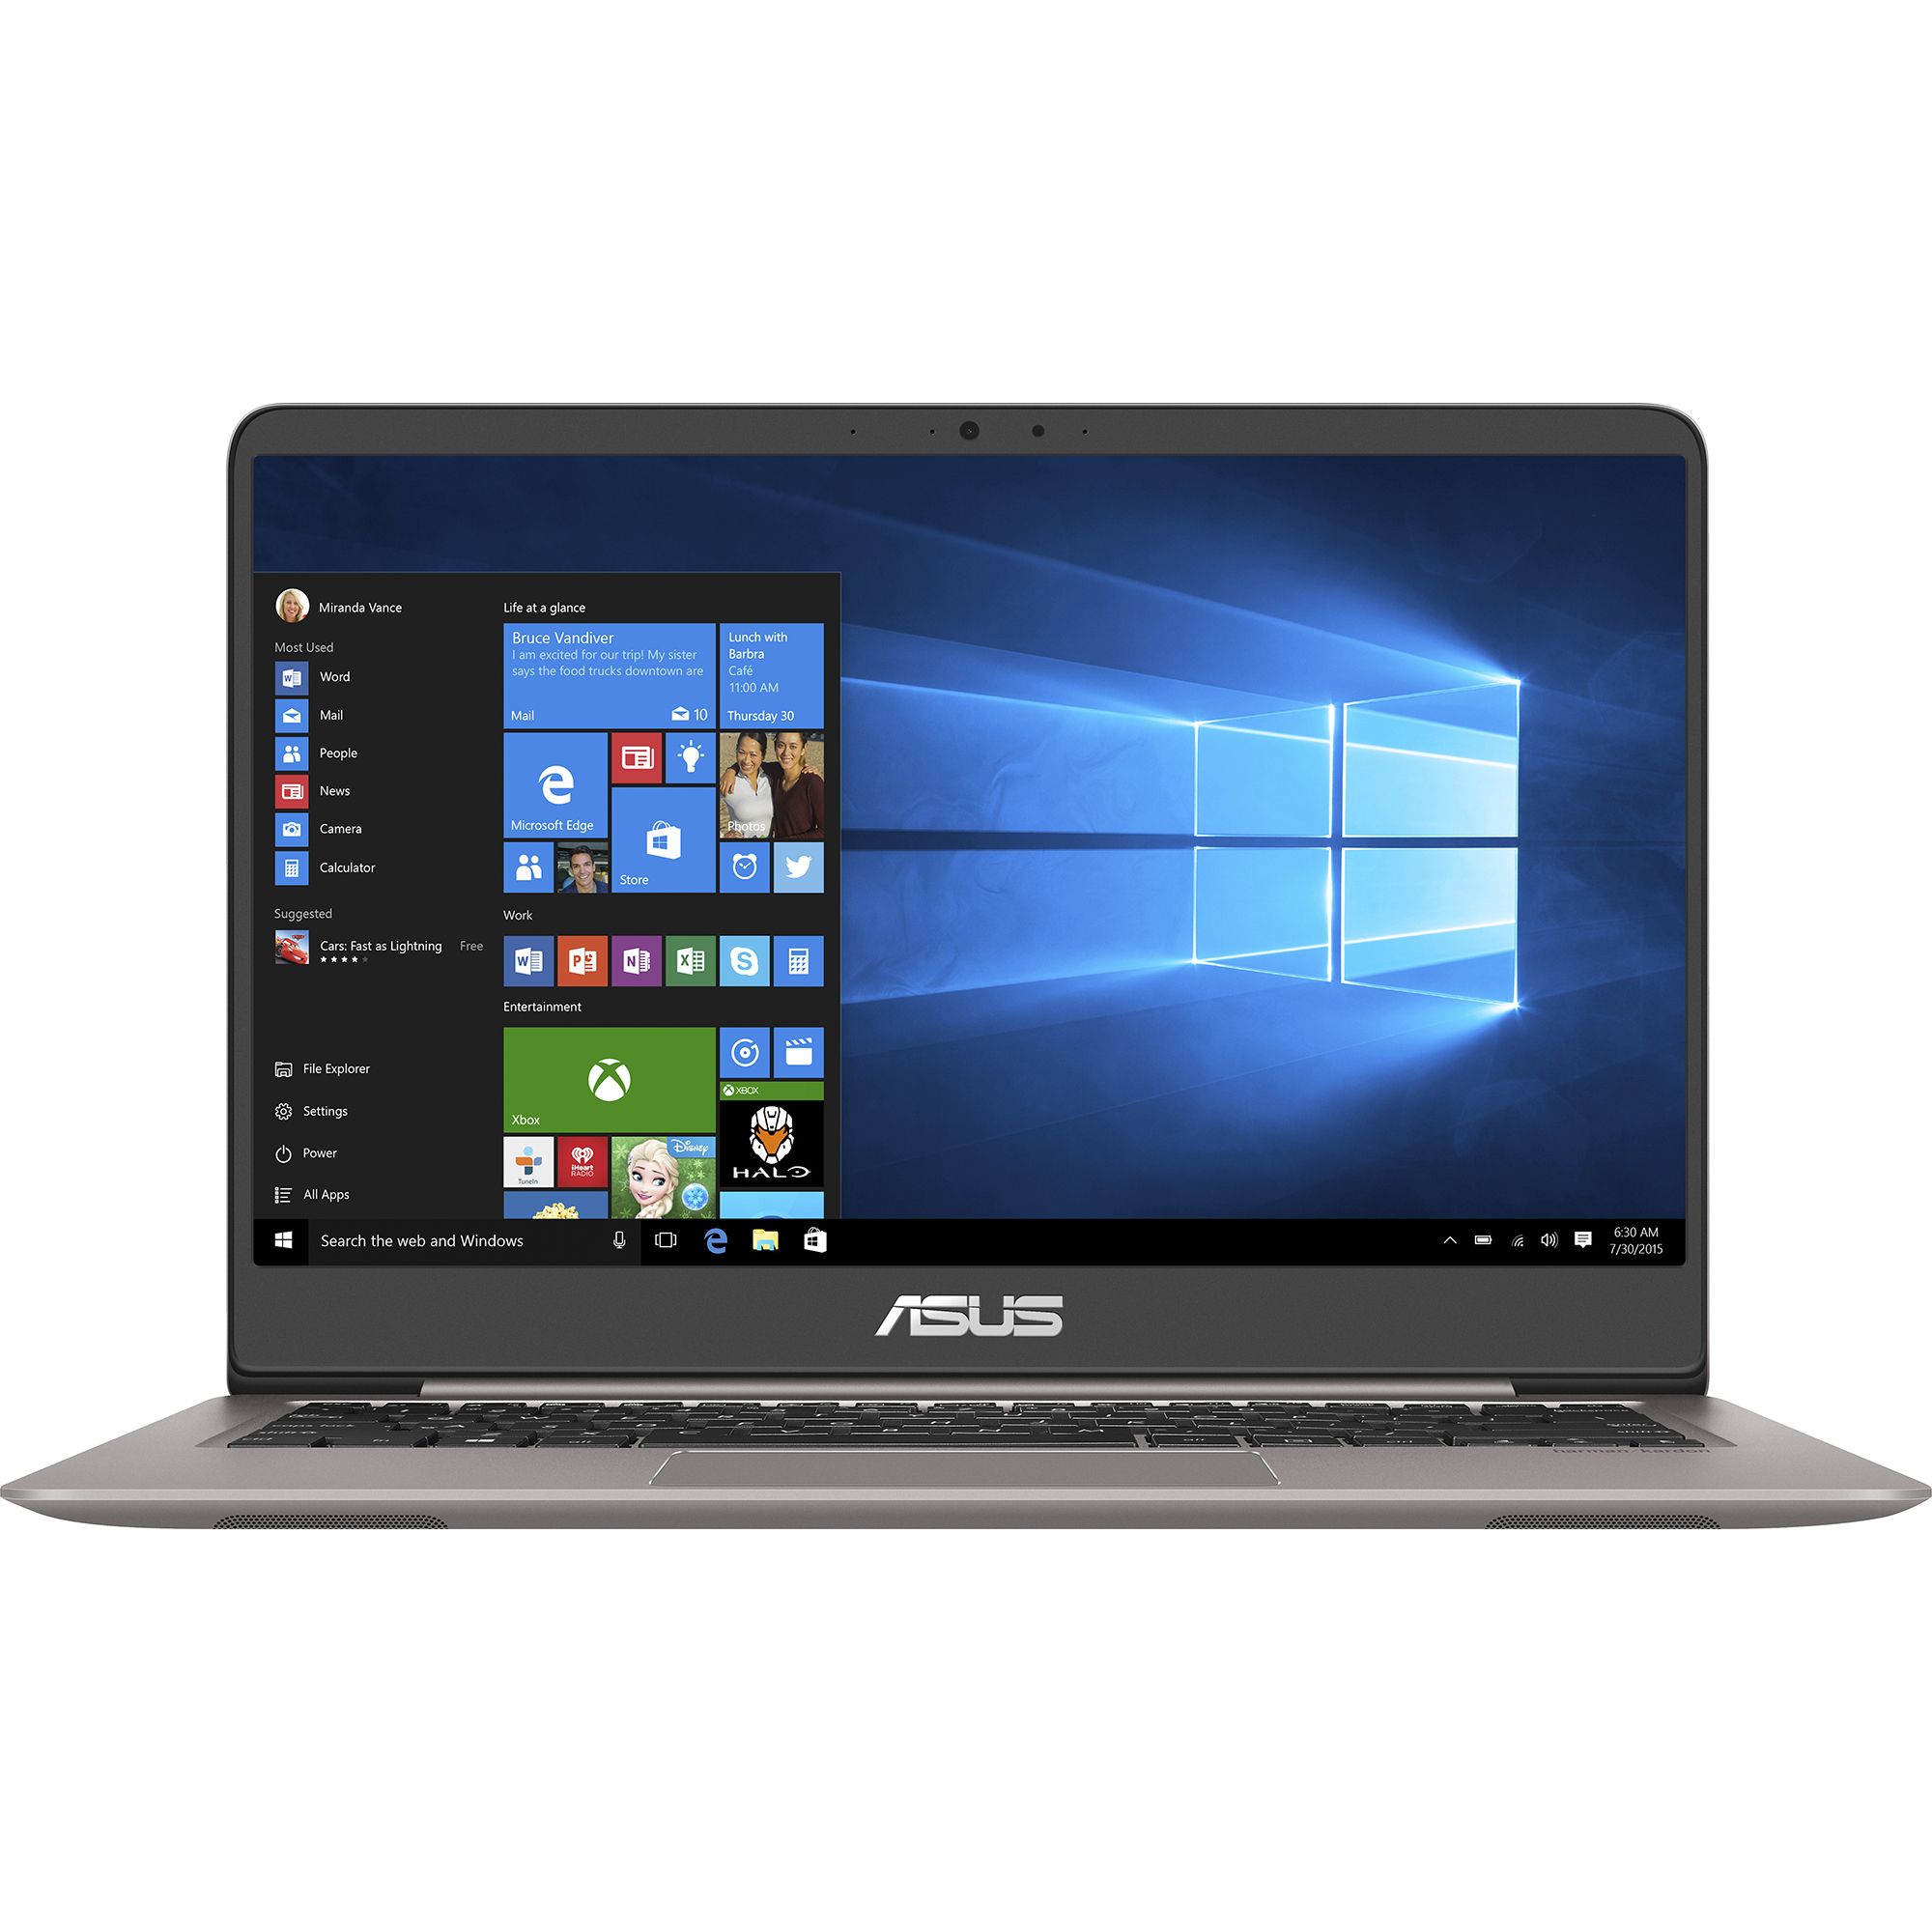 instalare windows 10 pe laptop asus nou Laptop ASUS UX410UQ-GV105T, Intel Core i5-7200U, 8GB DDR4, HDD 500GB + SSD 128GB, nVidia GeForce 940MX 2GB, Windows 10